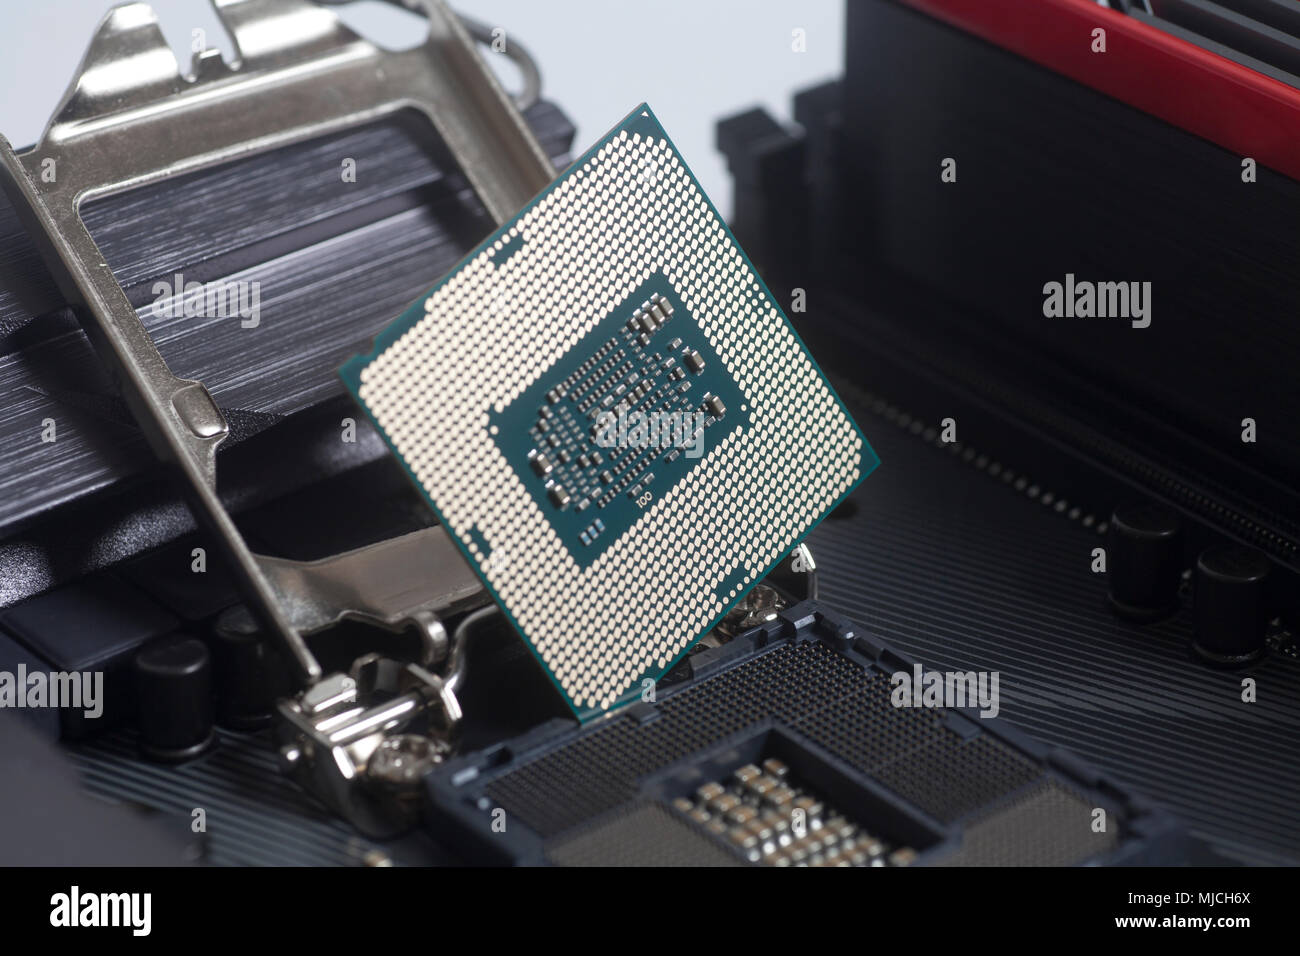 Intel LGA 1151 cpu socket on motherboard Computer PC with cpu processor  close up Stock Photo - Alamy